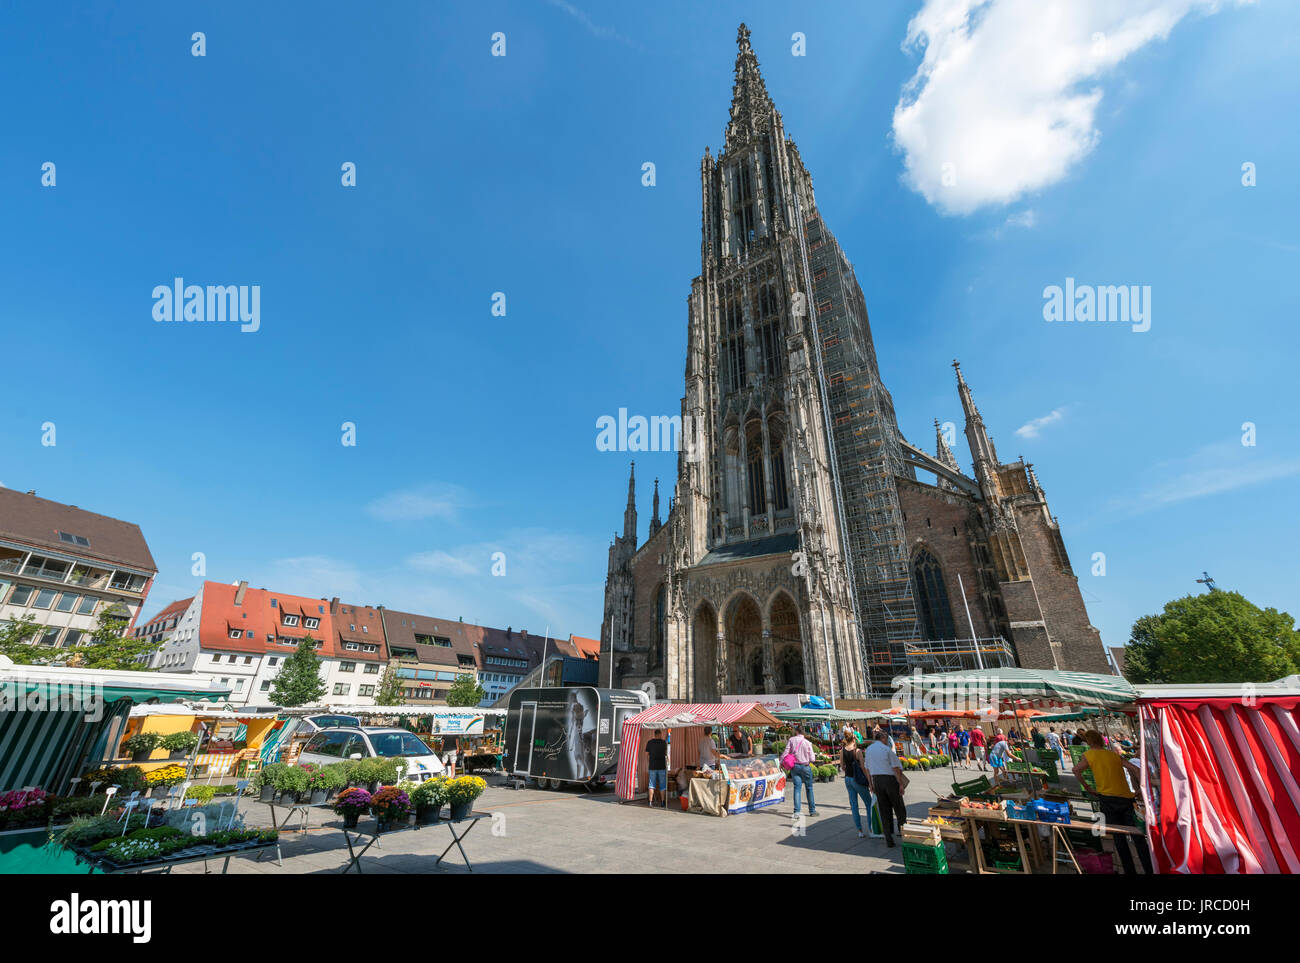 Mercato davanti all'Münster, Münsterplatz, Ulm, Baden-Württemberg, Germania Foto Stock